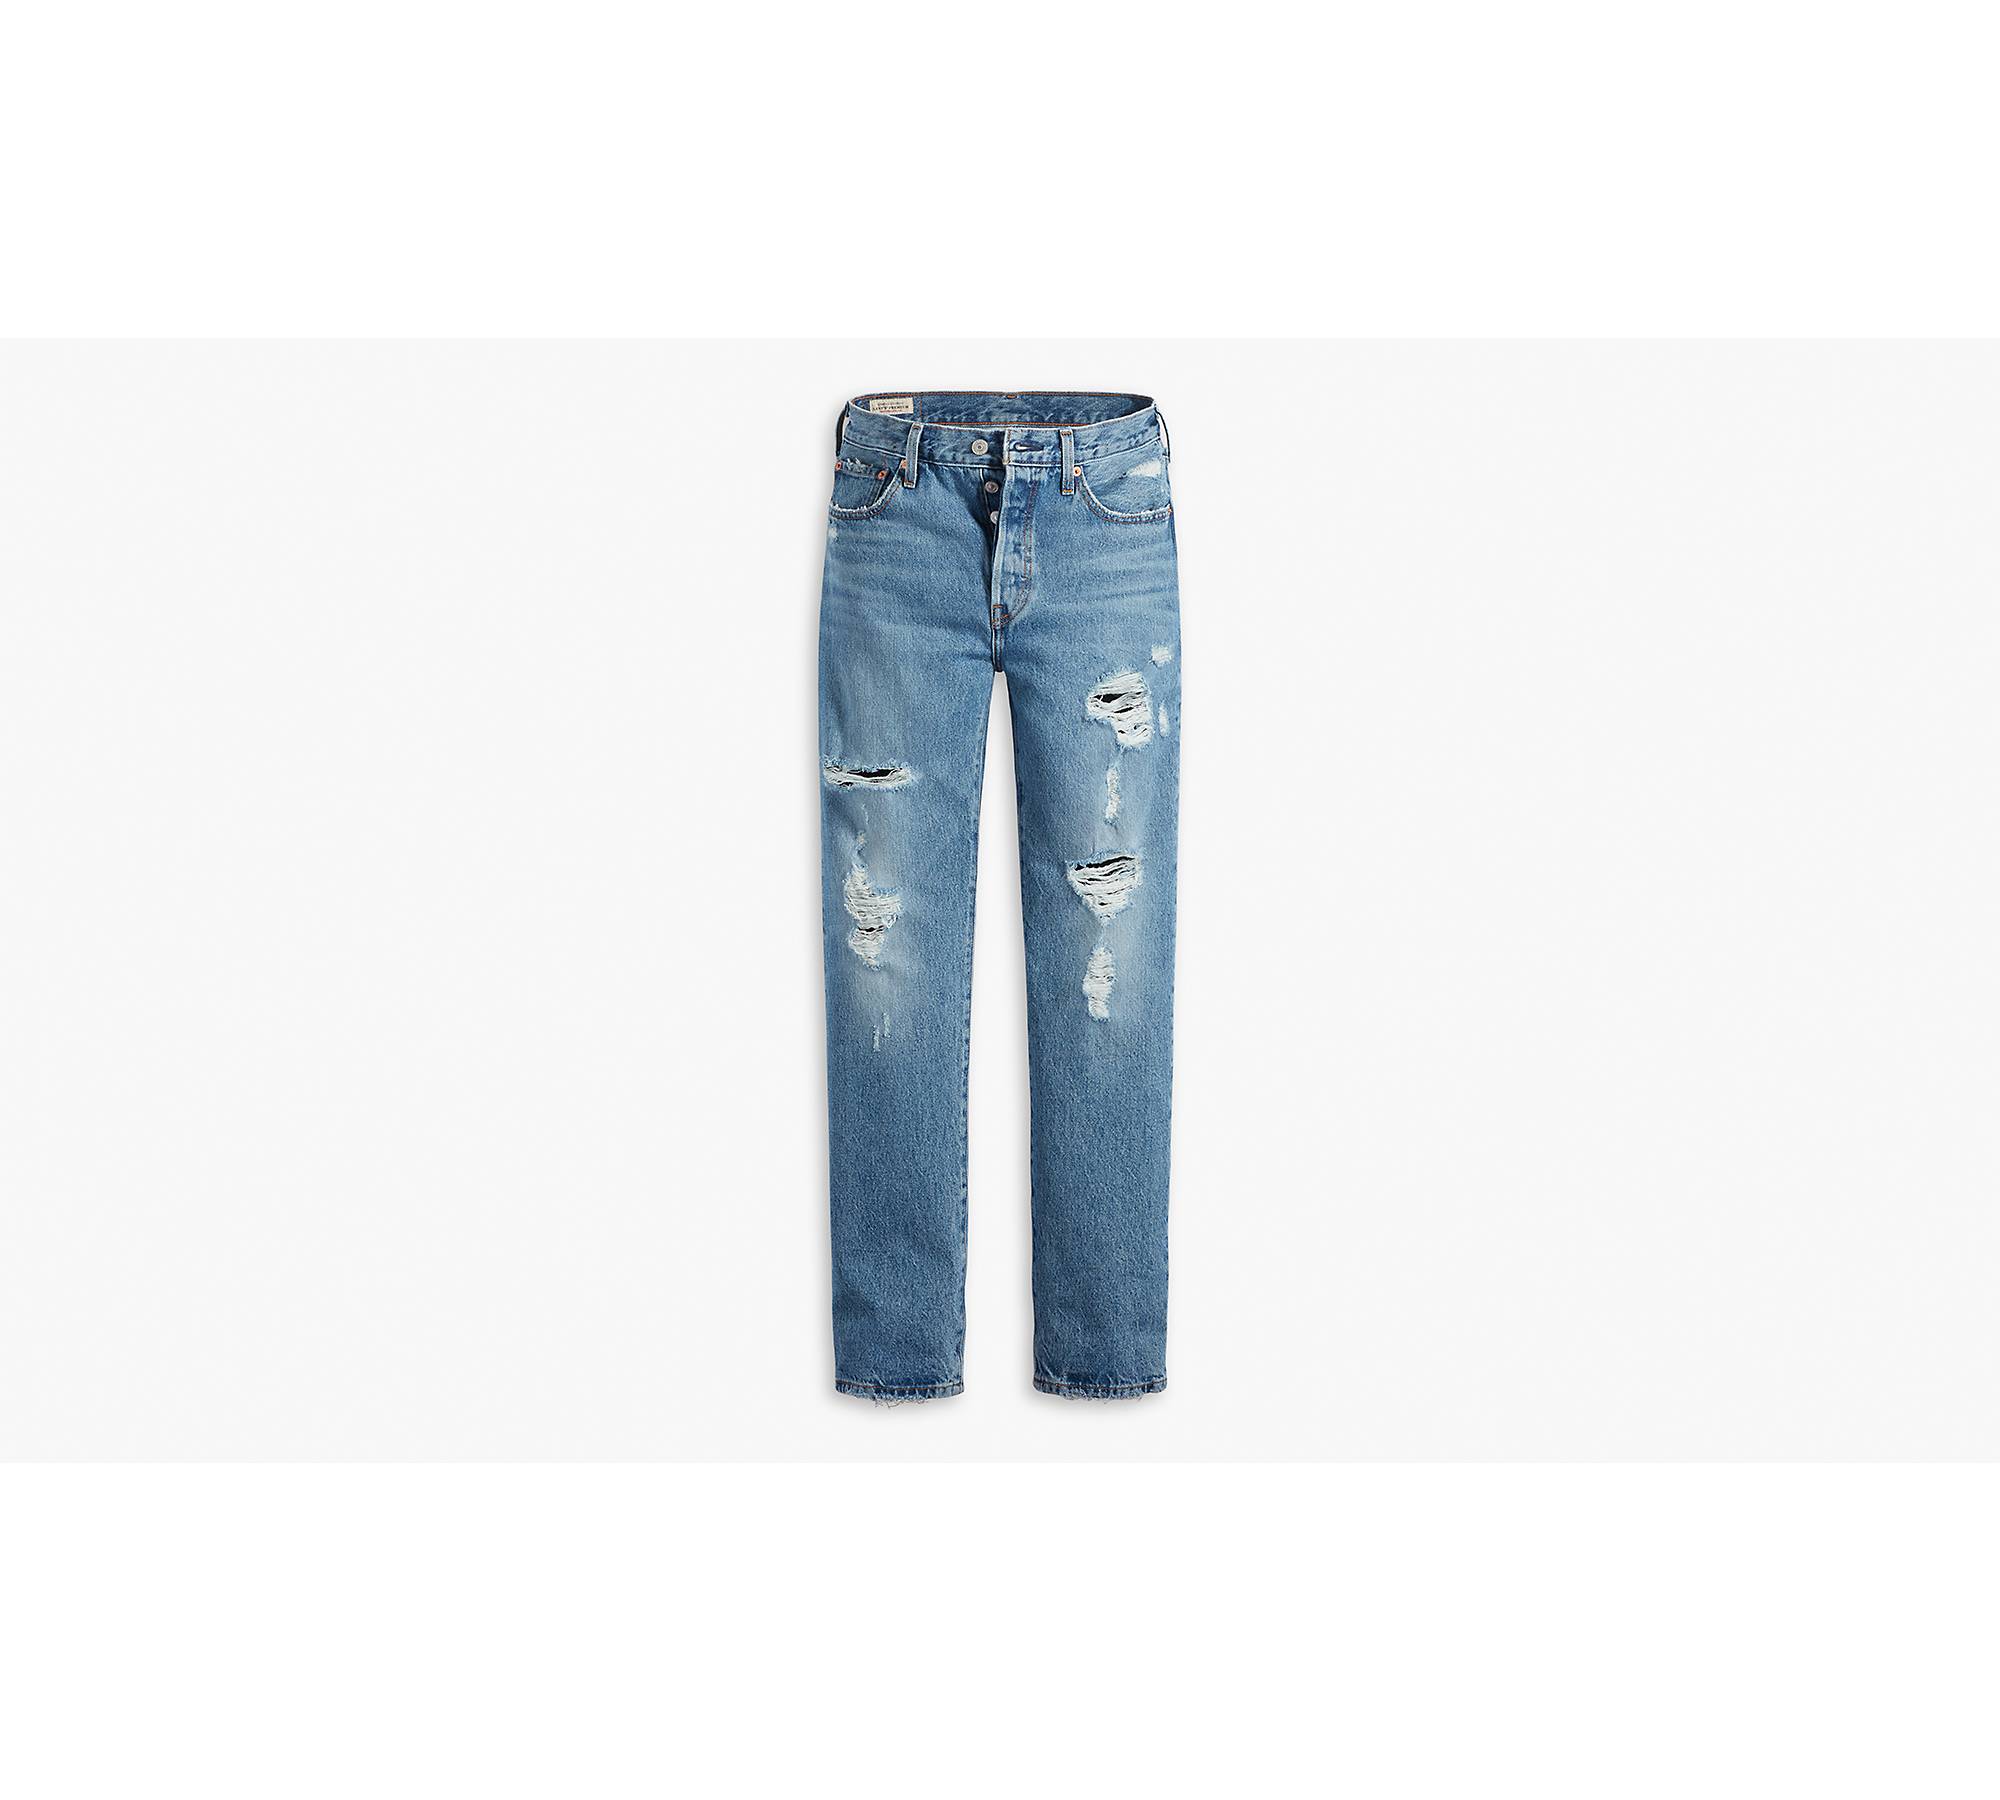 Levi's 501 Jeans For Women Jeans 12501 0413 Z7310 White Worn In